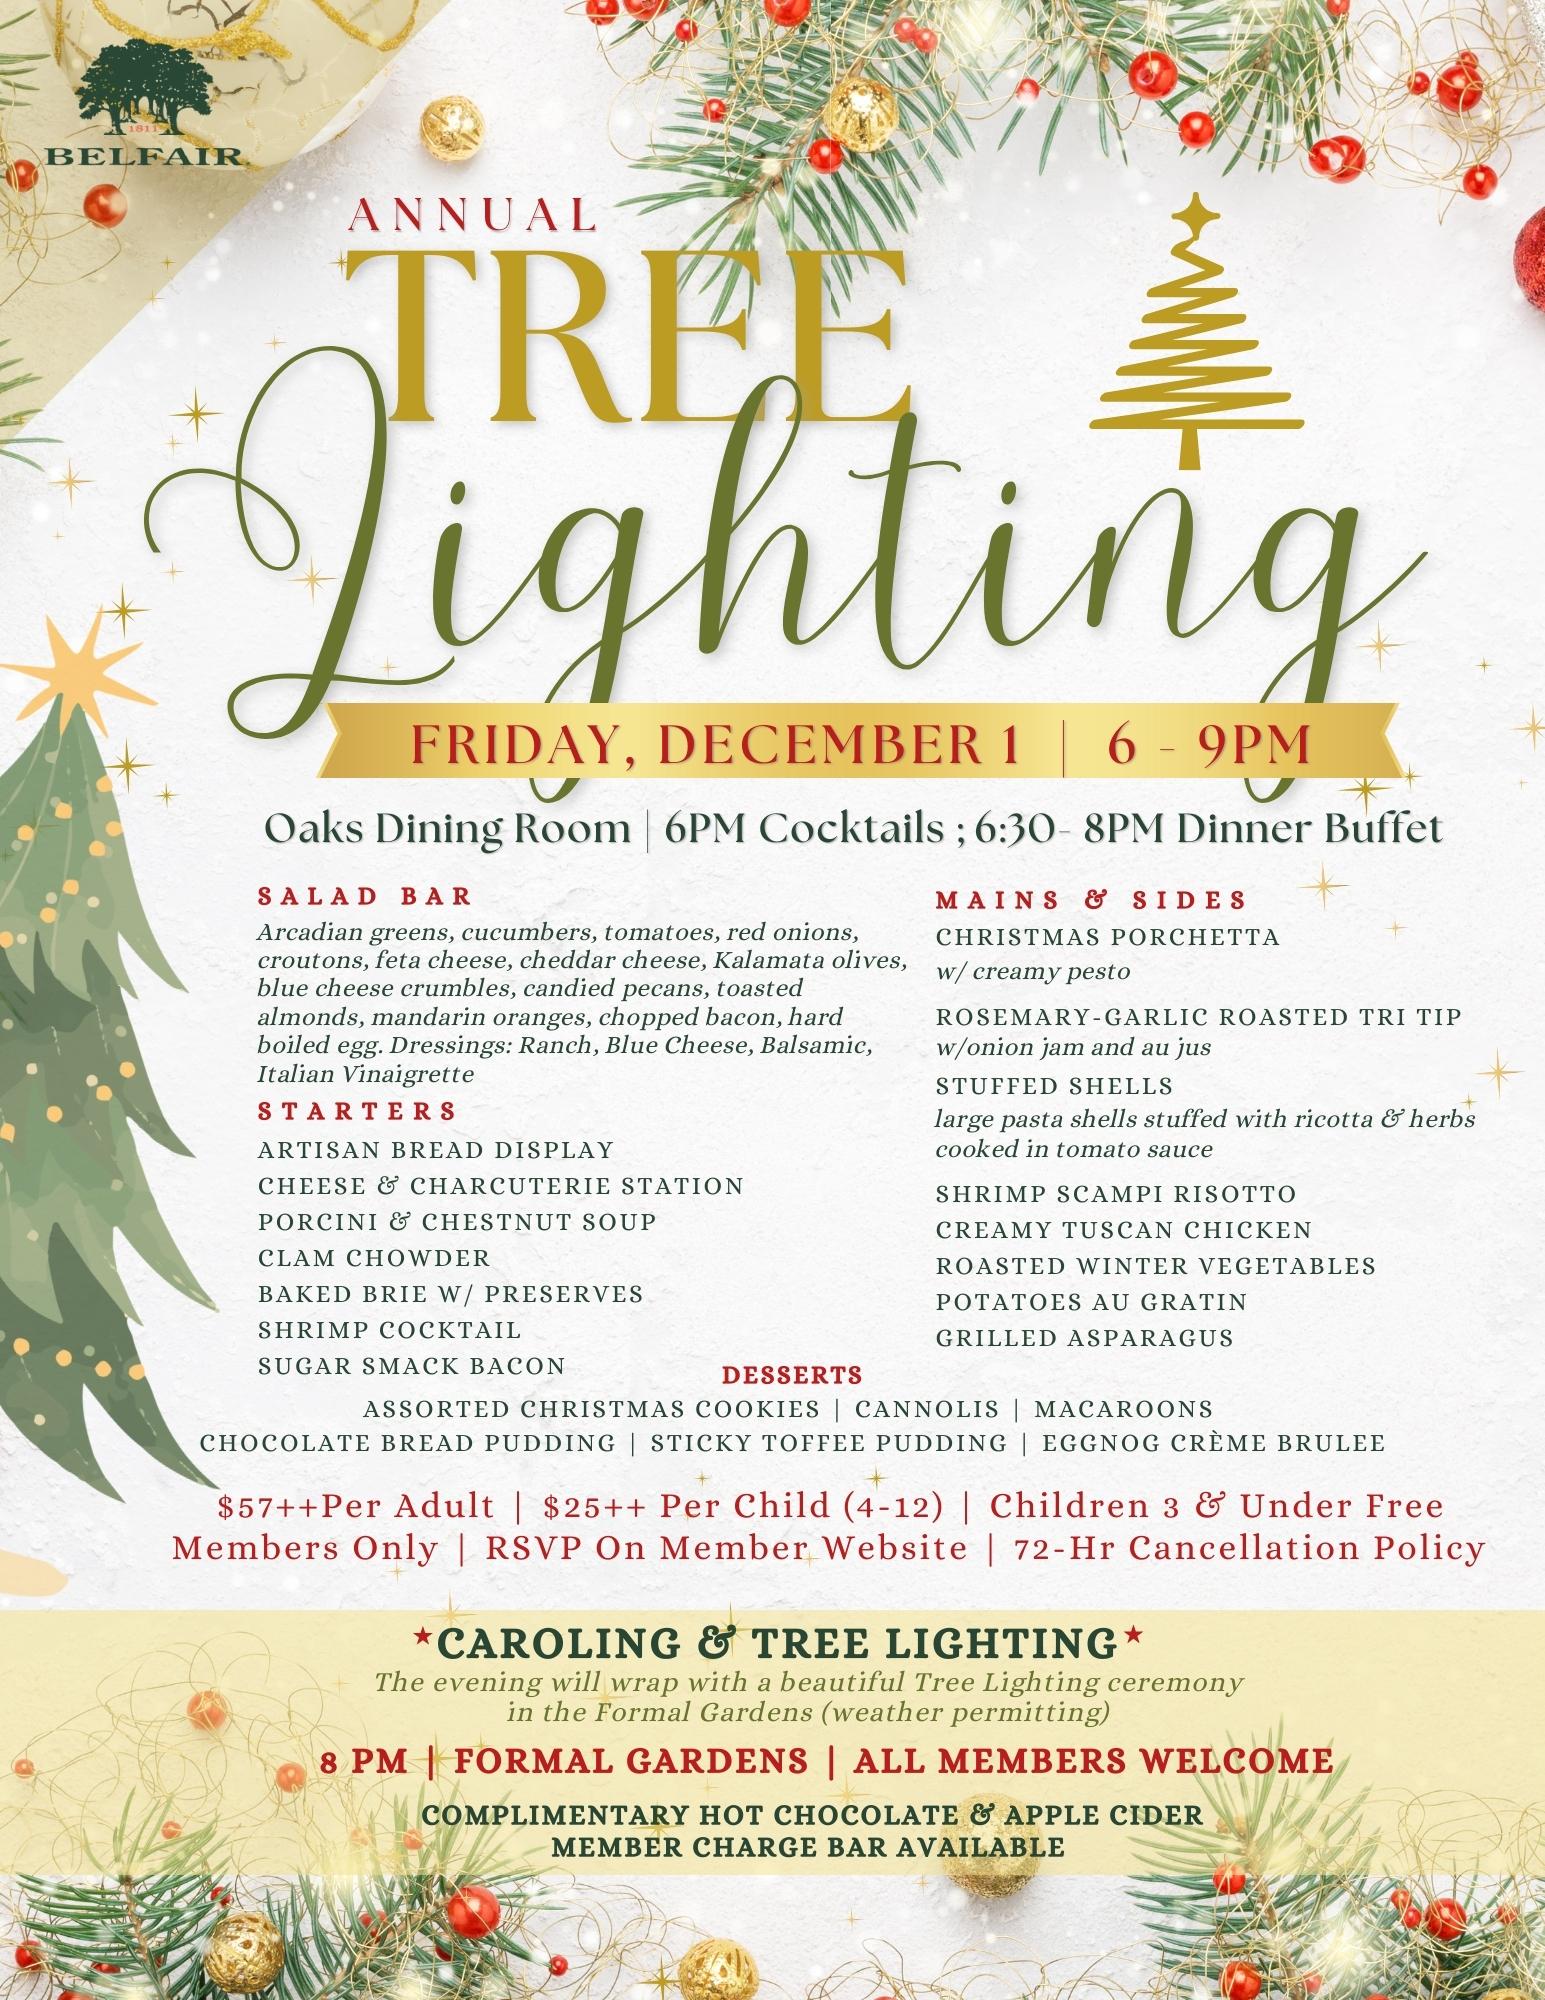 Belfair Calendar Event Tree Lighting